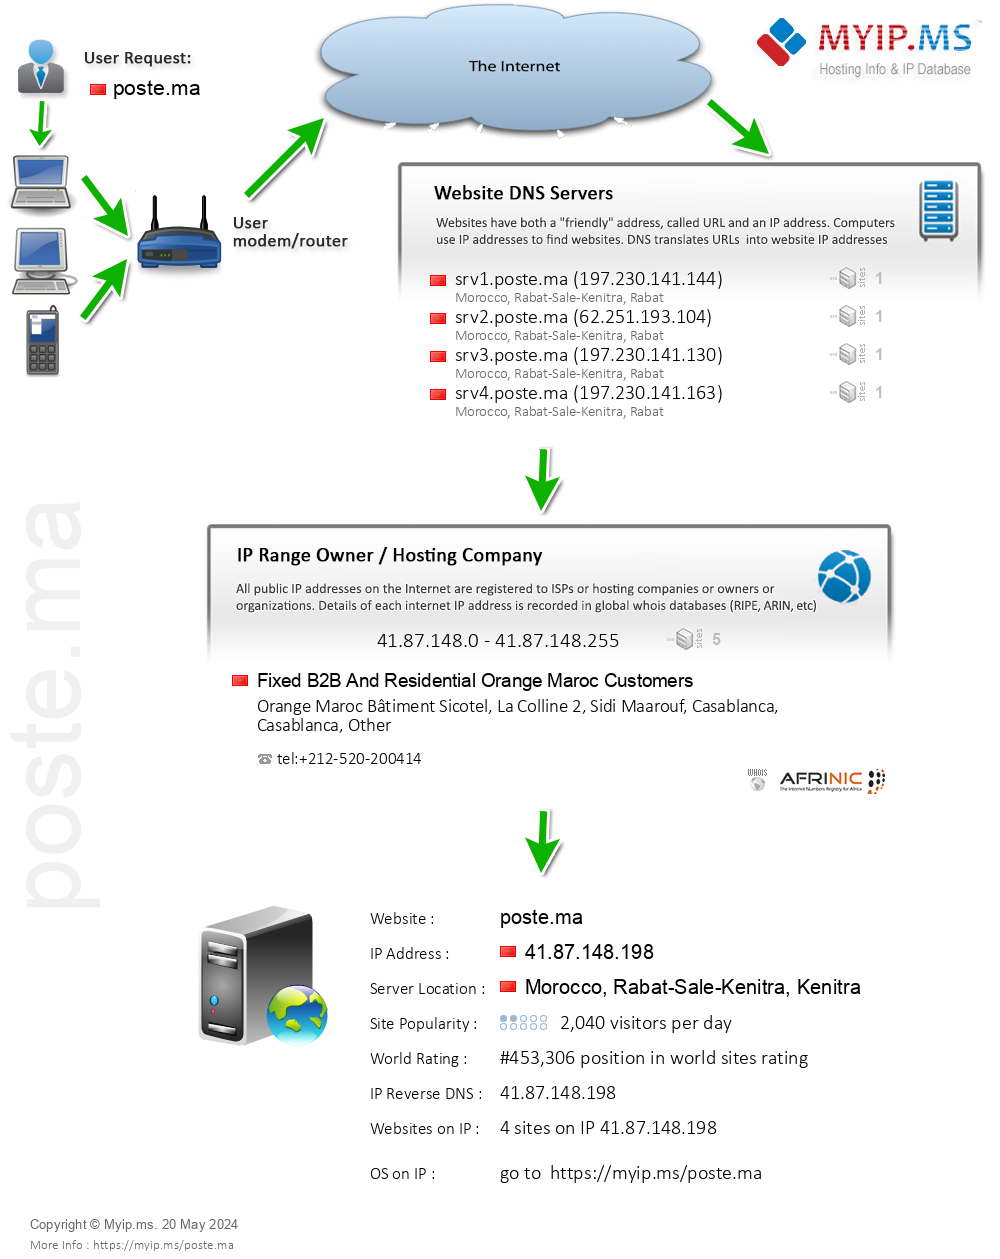 Poste.ma - Website Hosting Visual IP Diagram